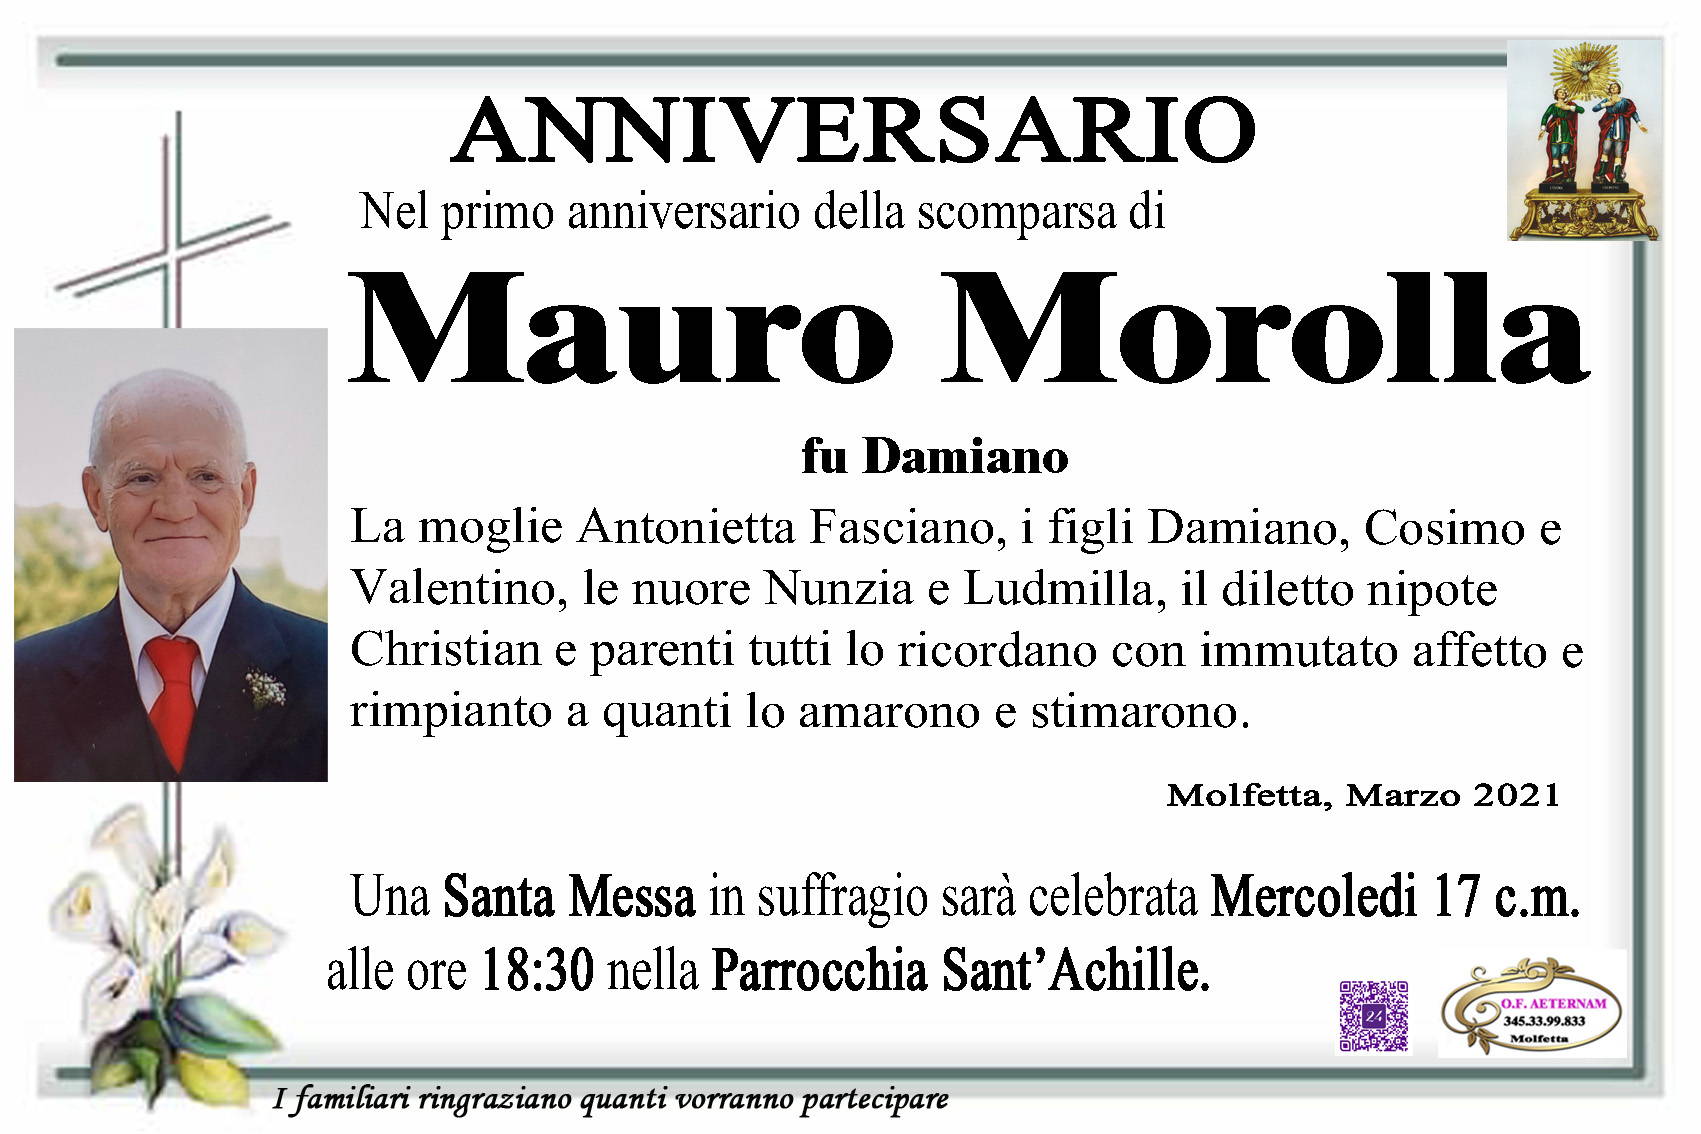 Mauro Morolla